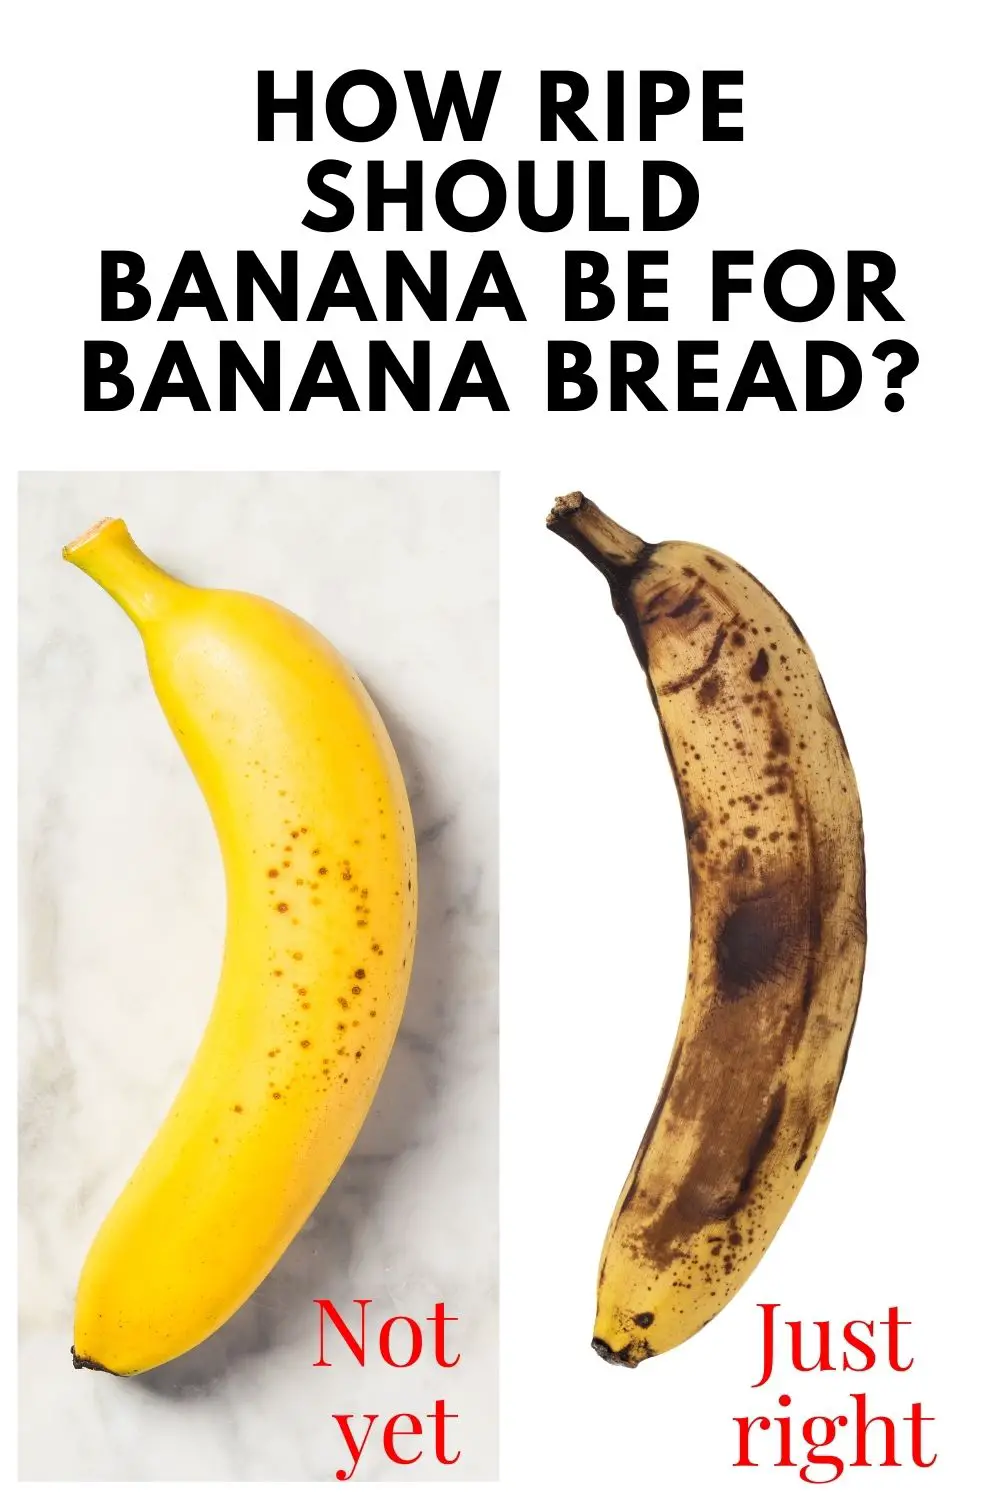 how ripe should bananas be for banana bread?